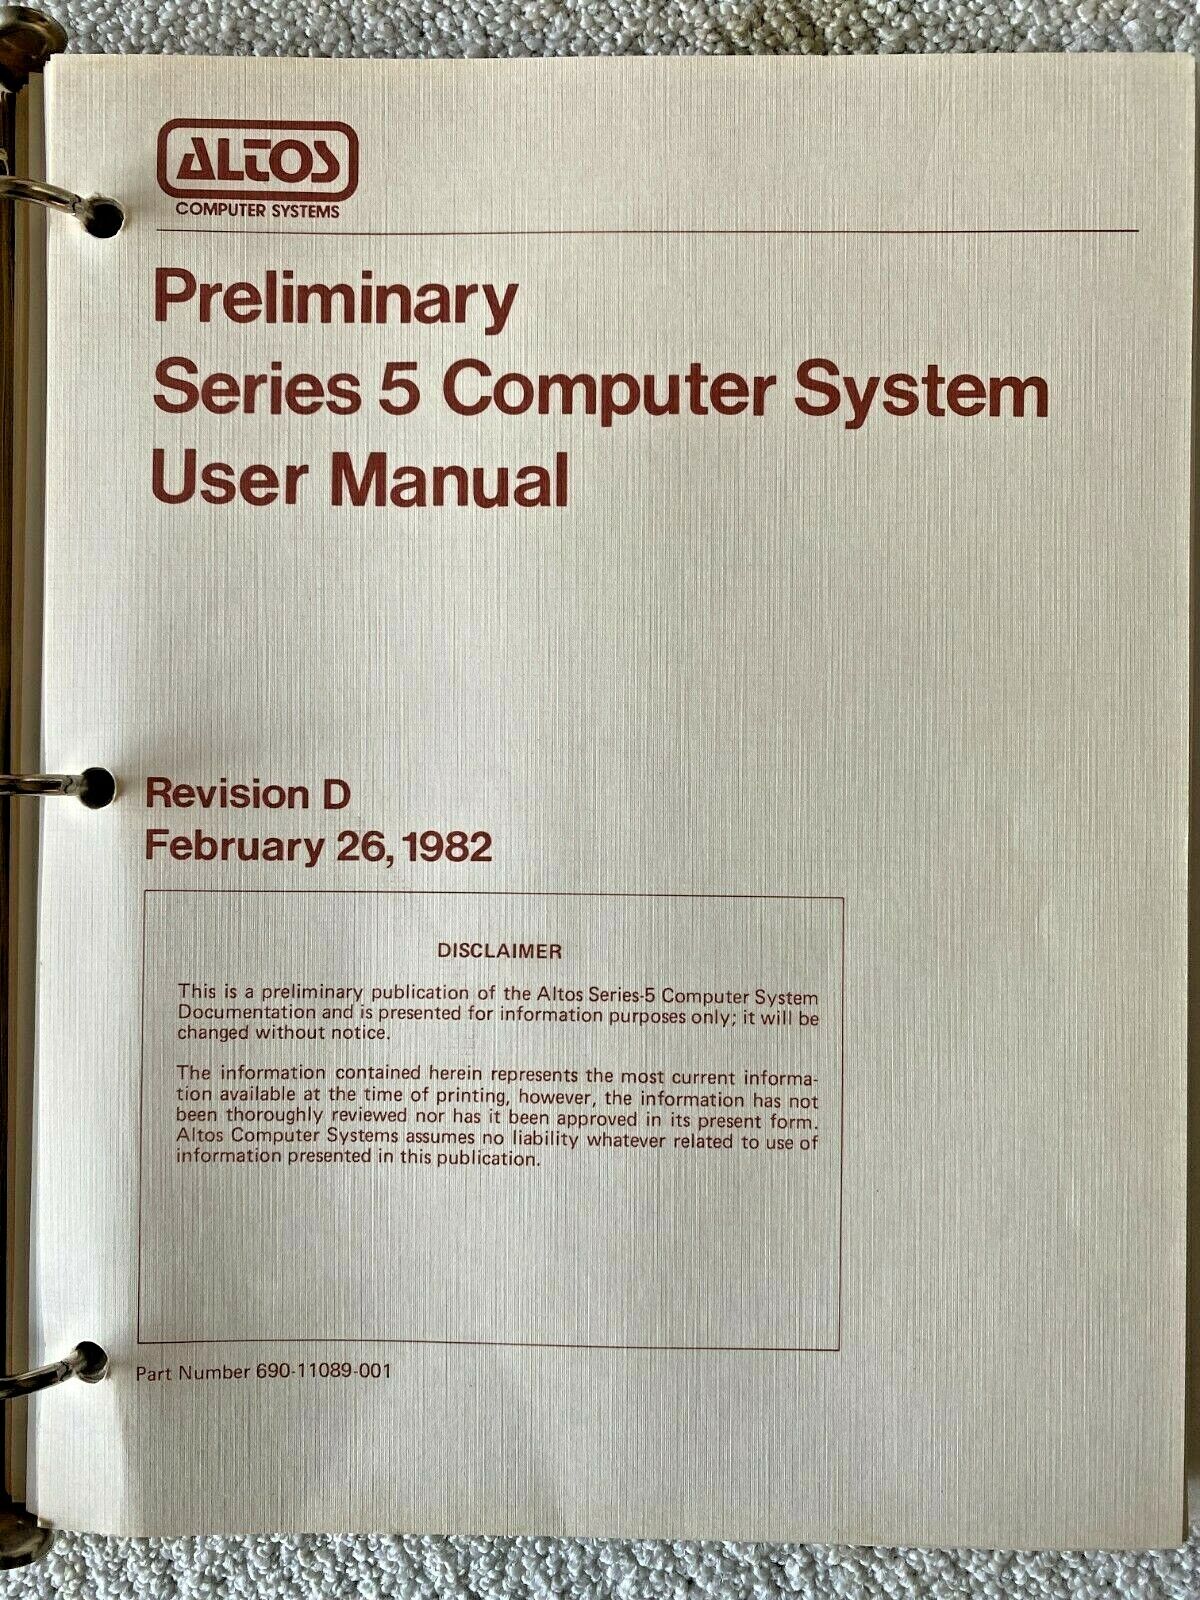 Altos Series 5 Computer System Rev D Preliminary User Manual w/Schematics